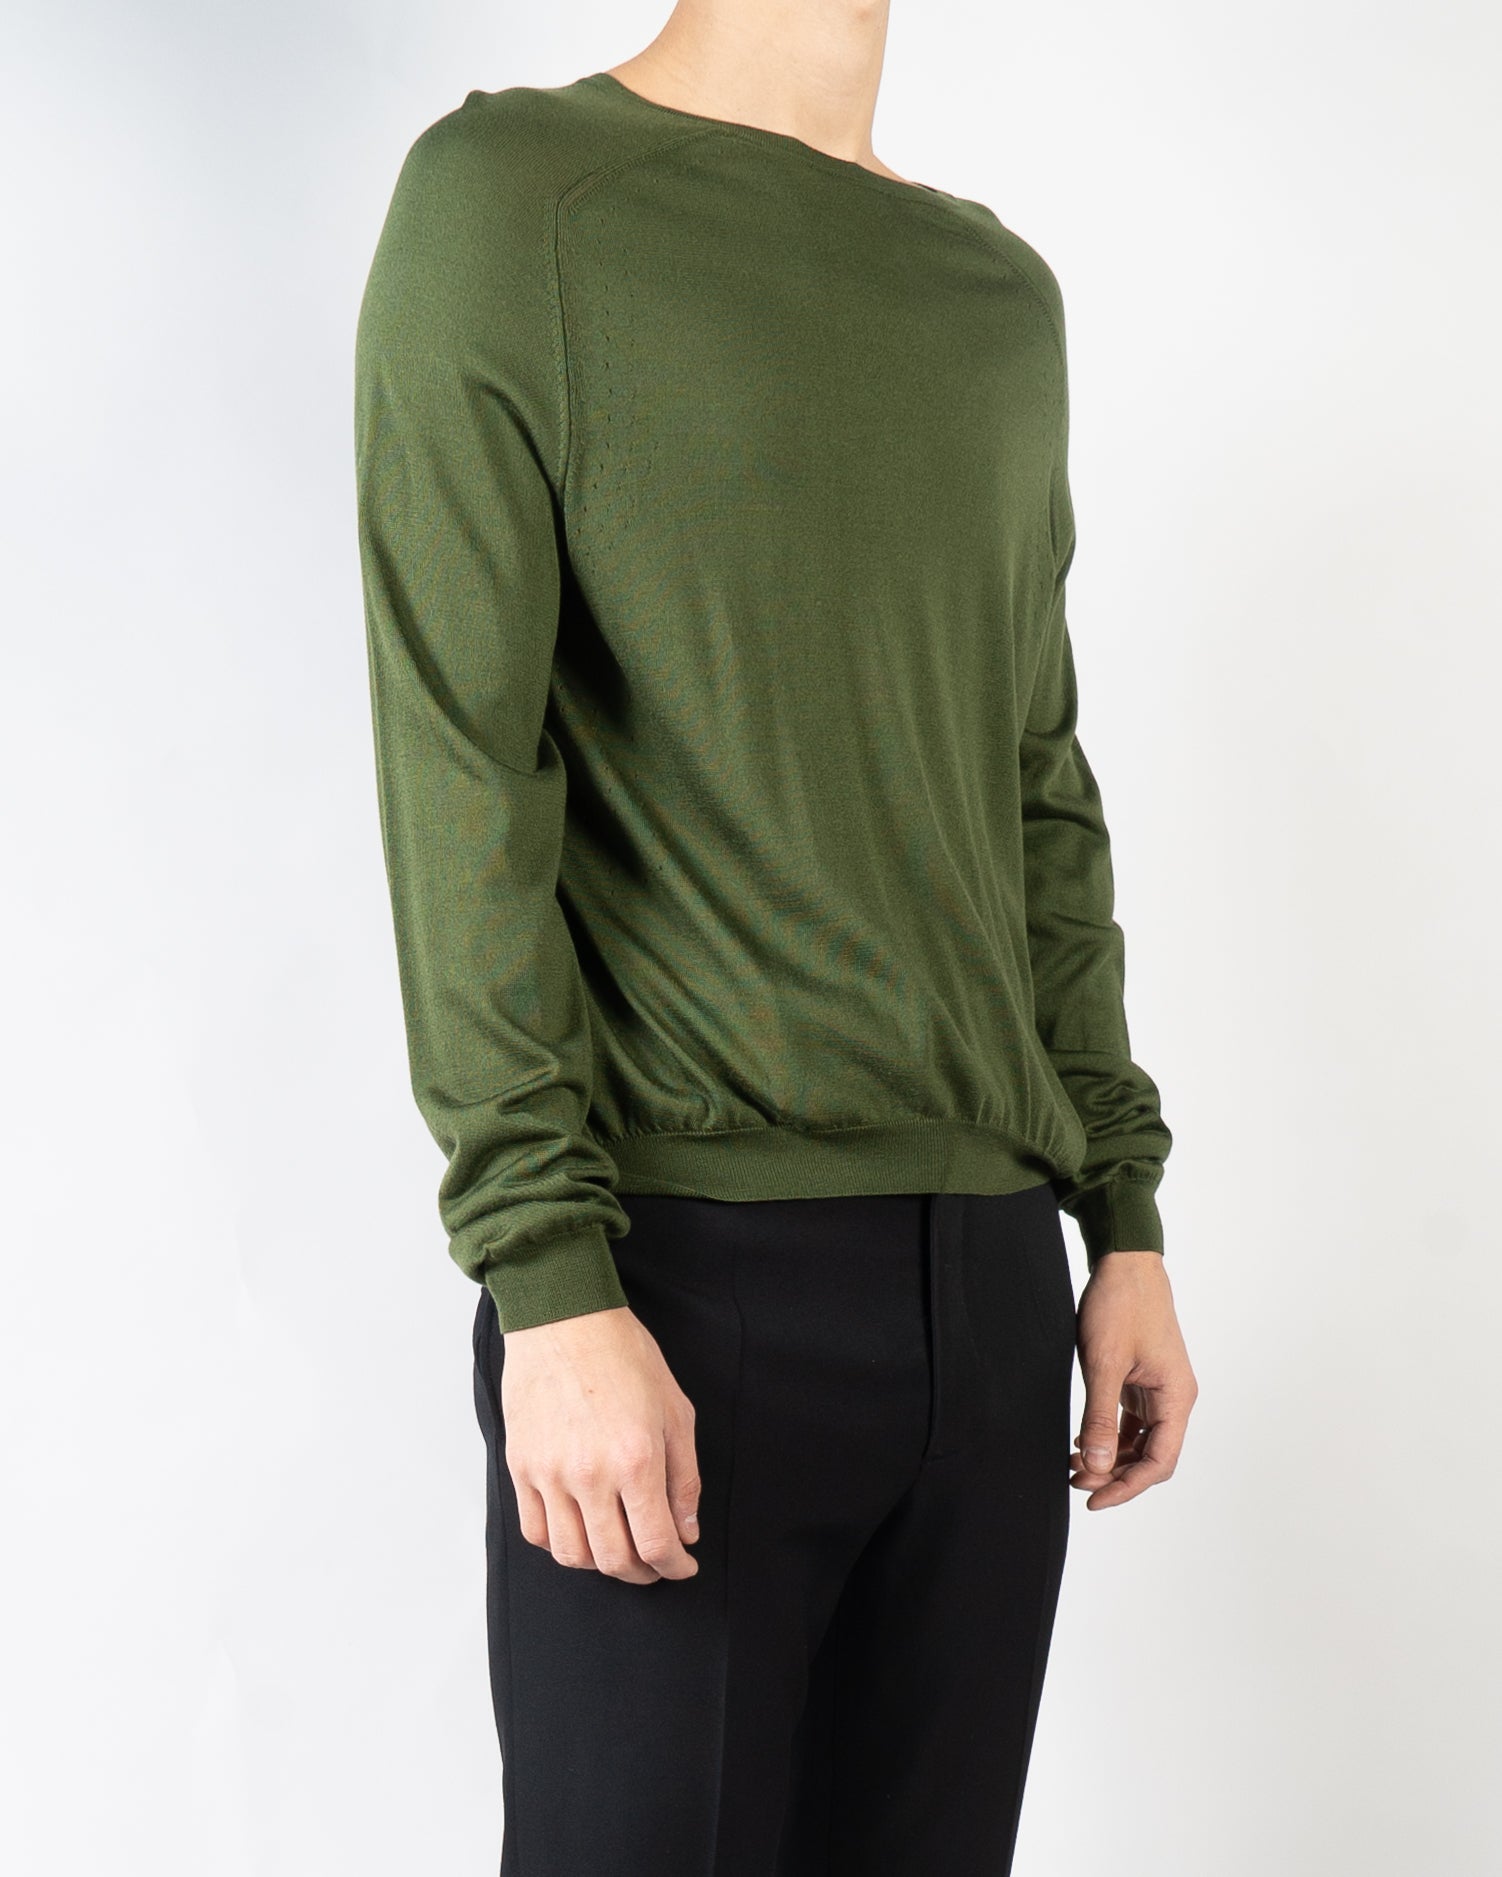 SS20 Green Sweater Sample